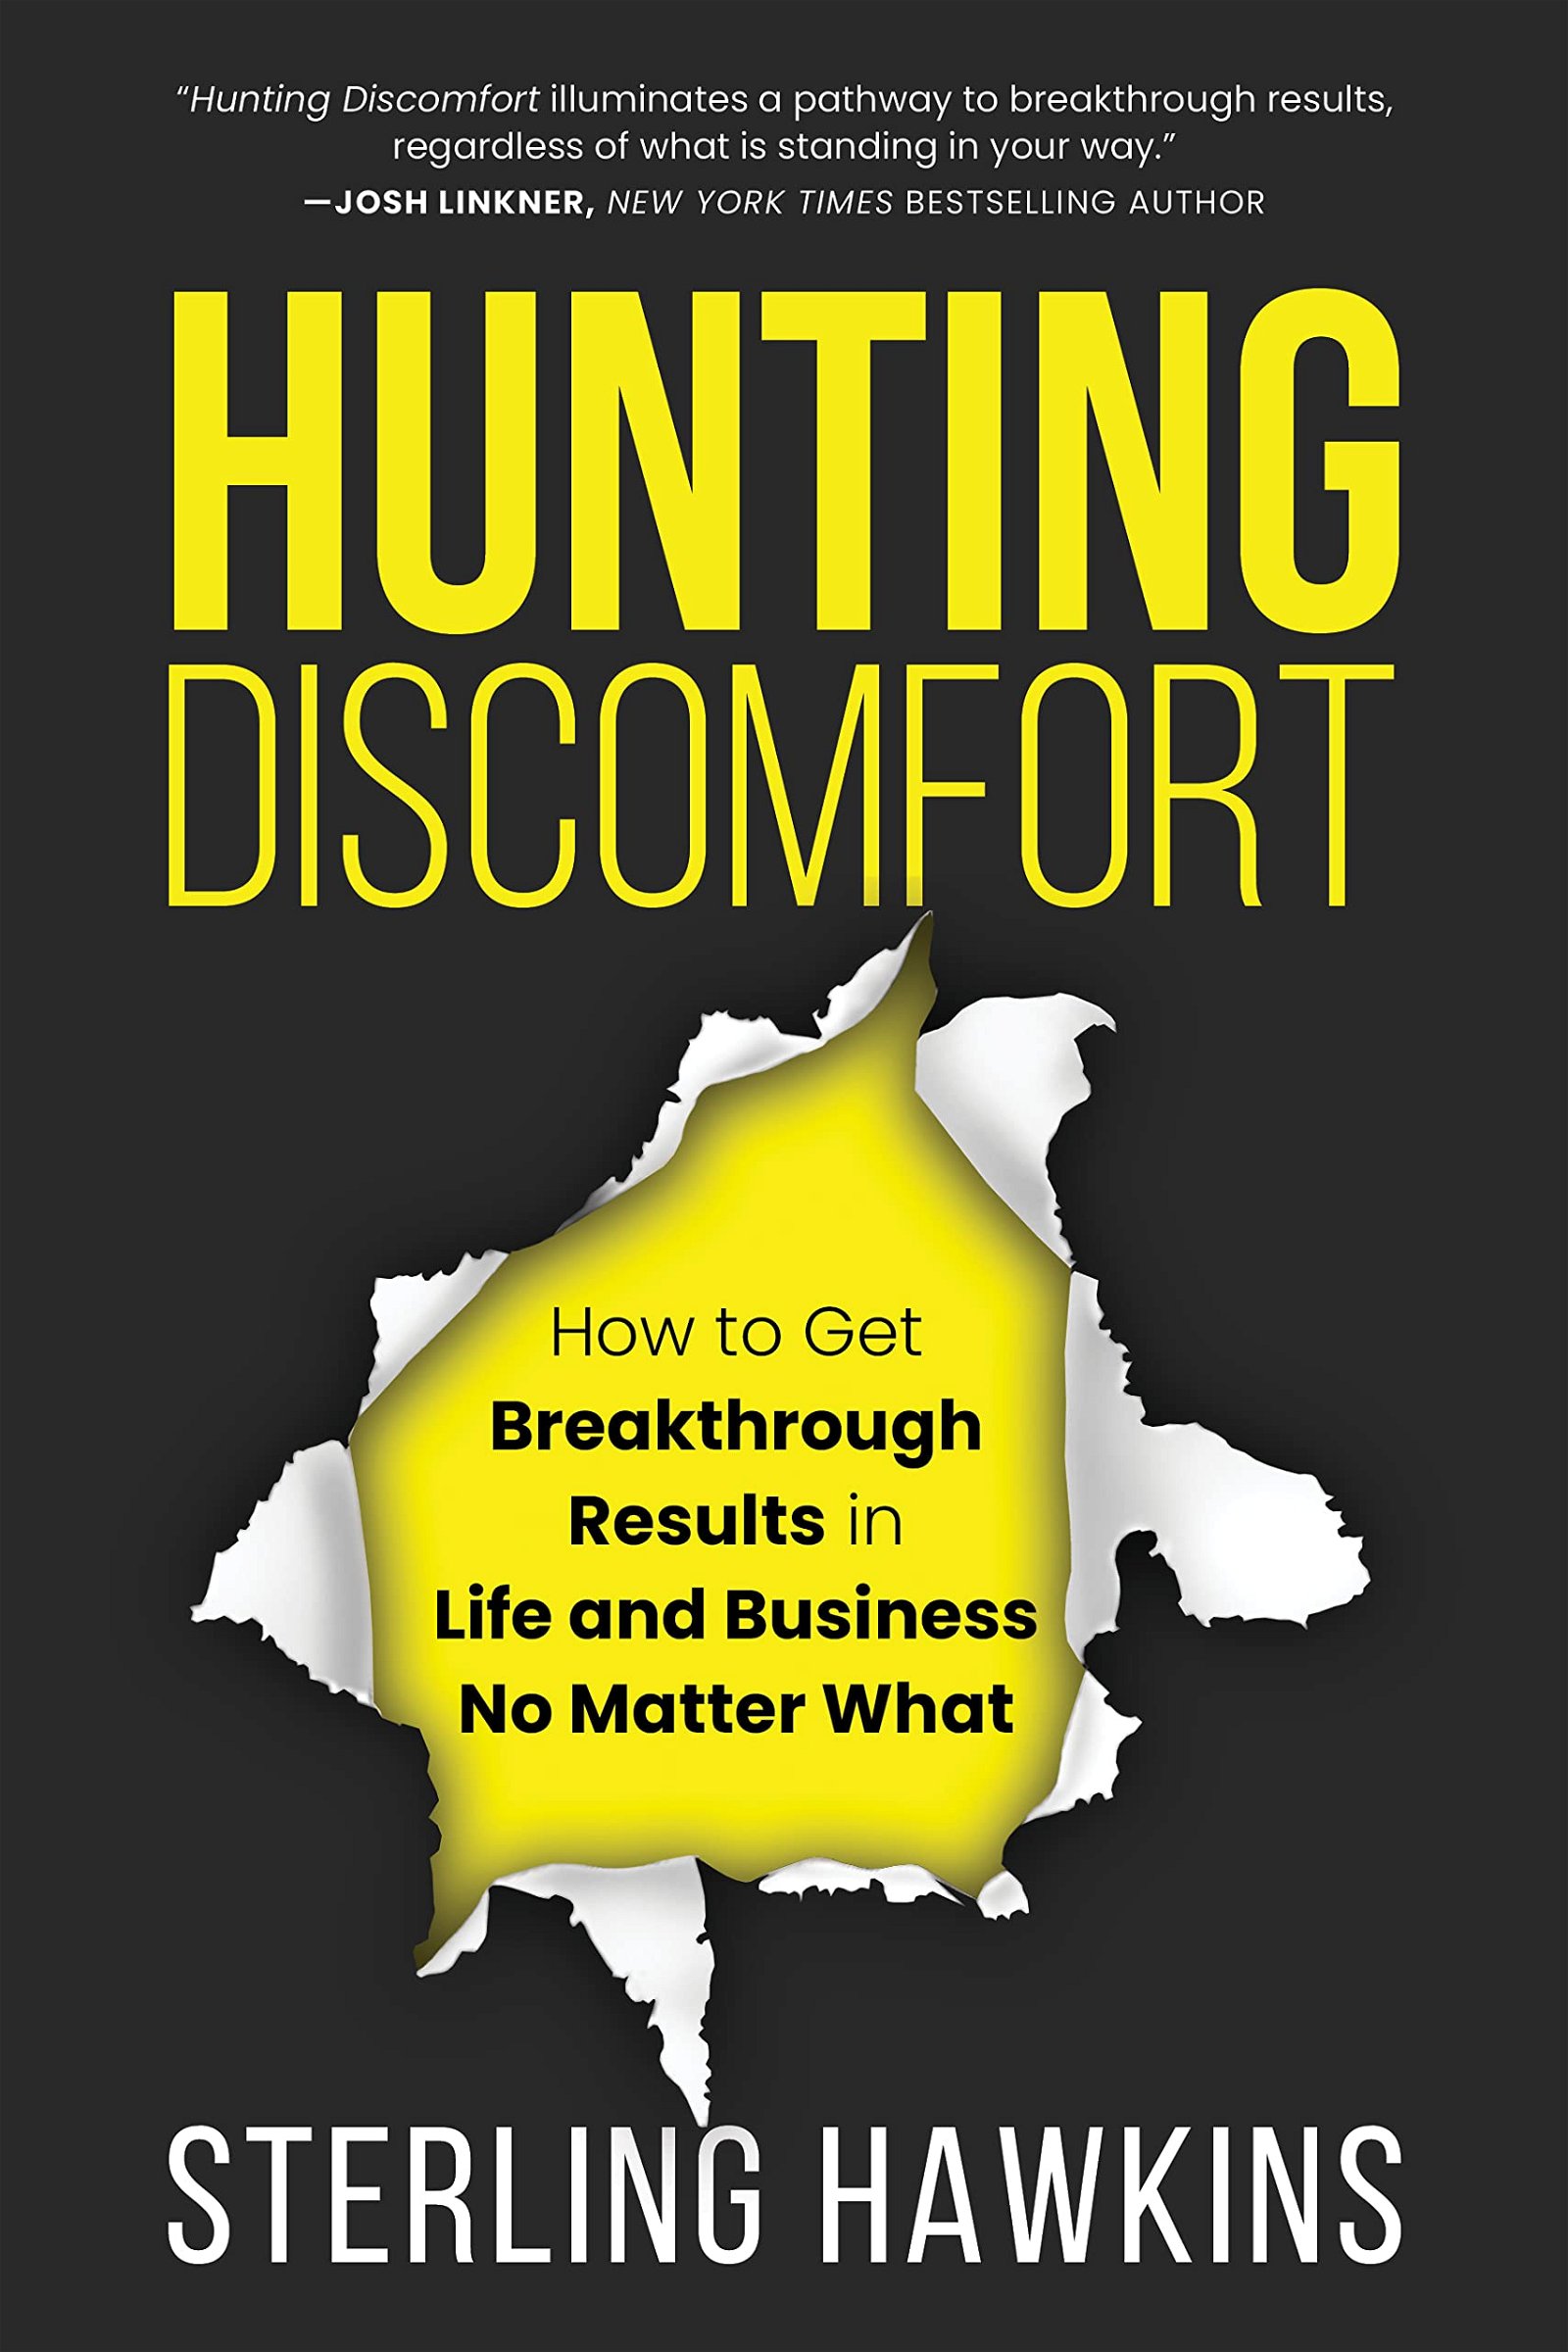 Hunting Discomfort by Sterling Hawkins